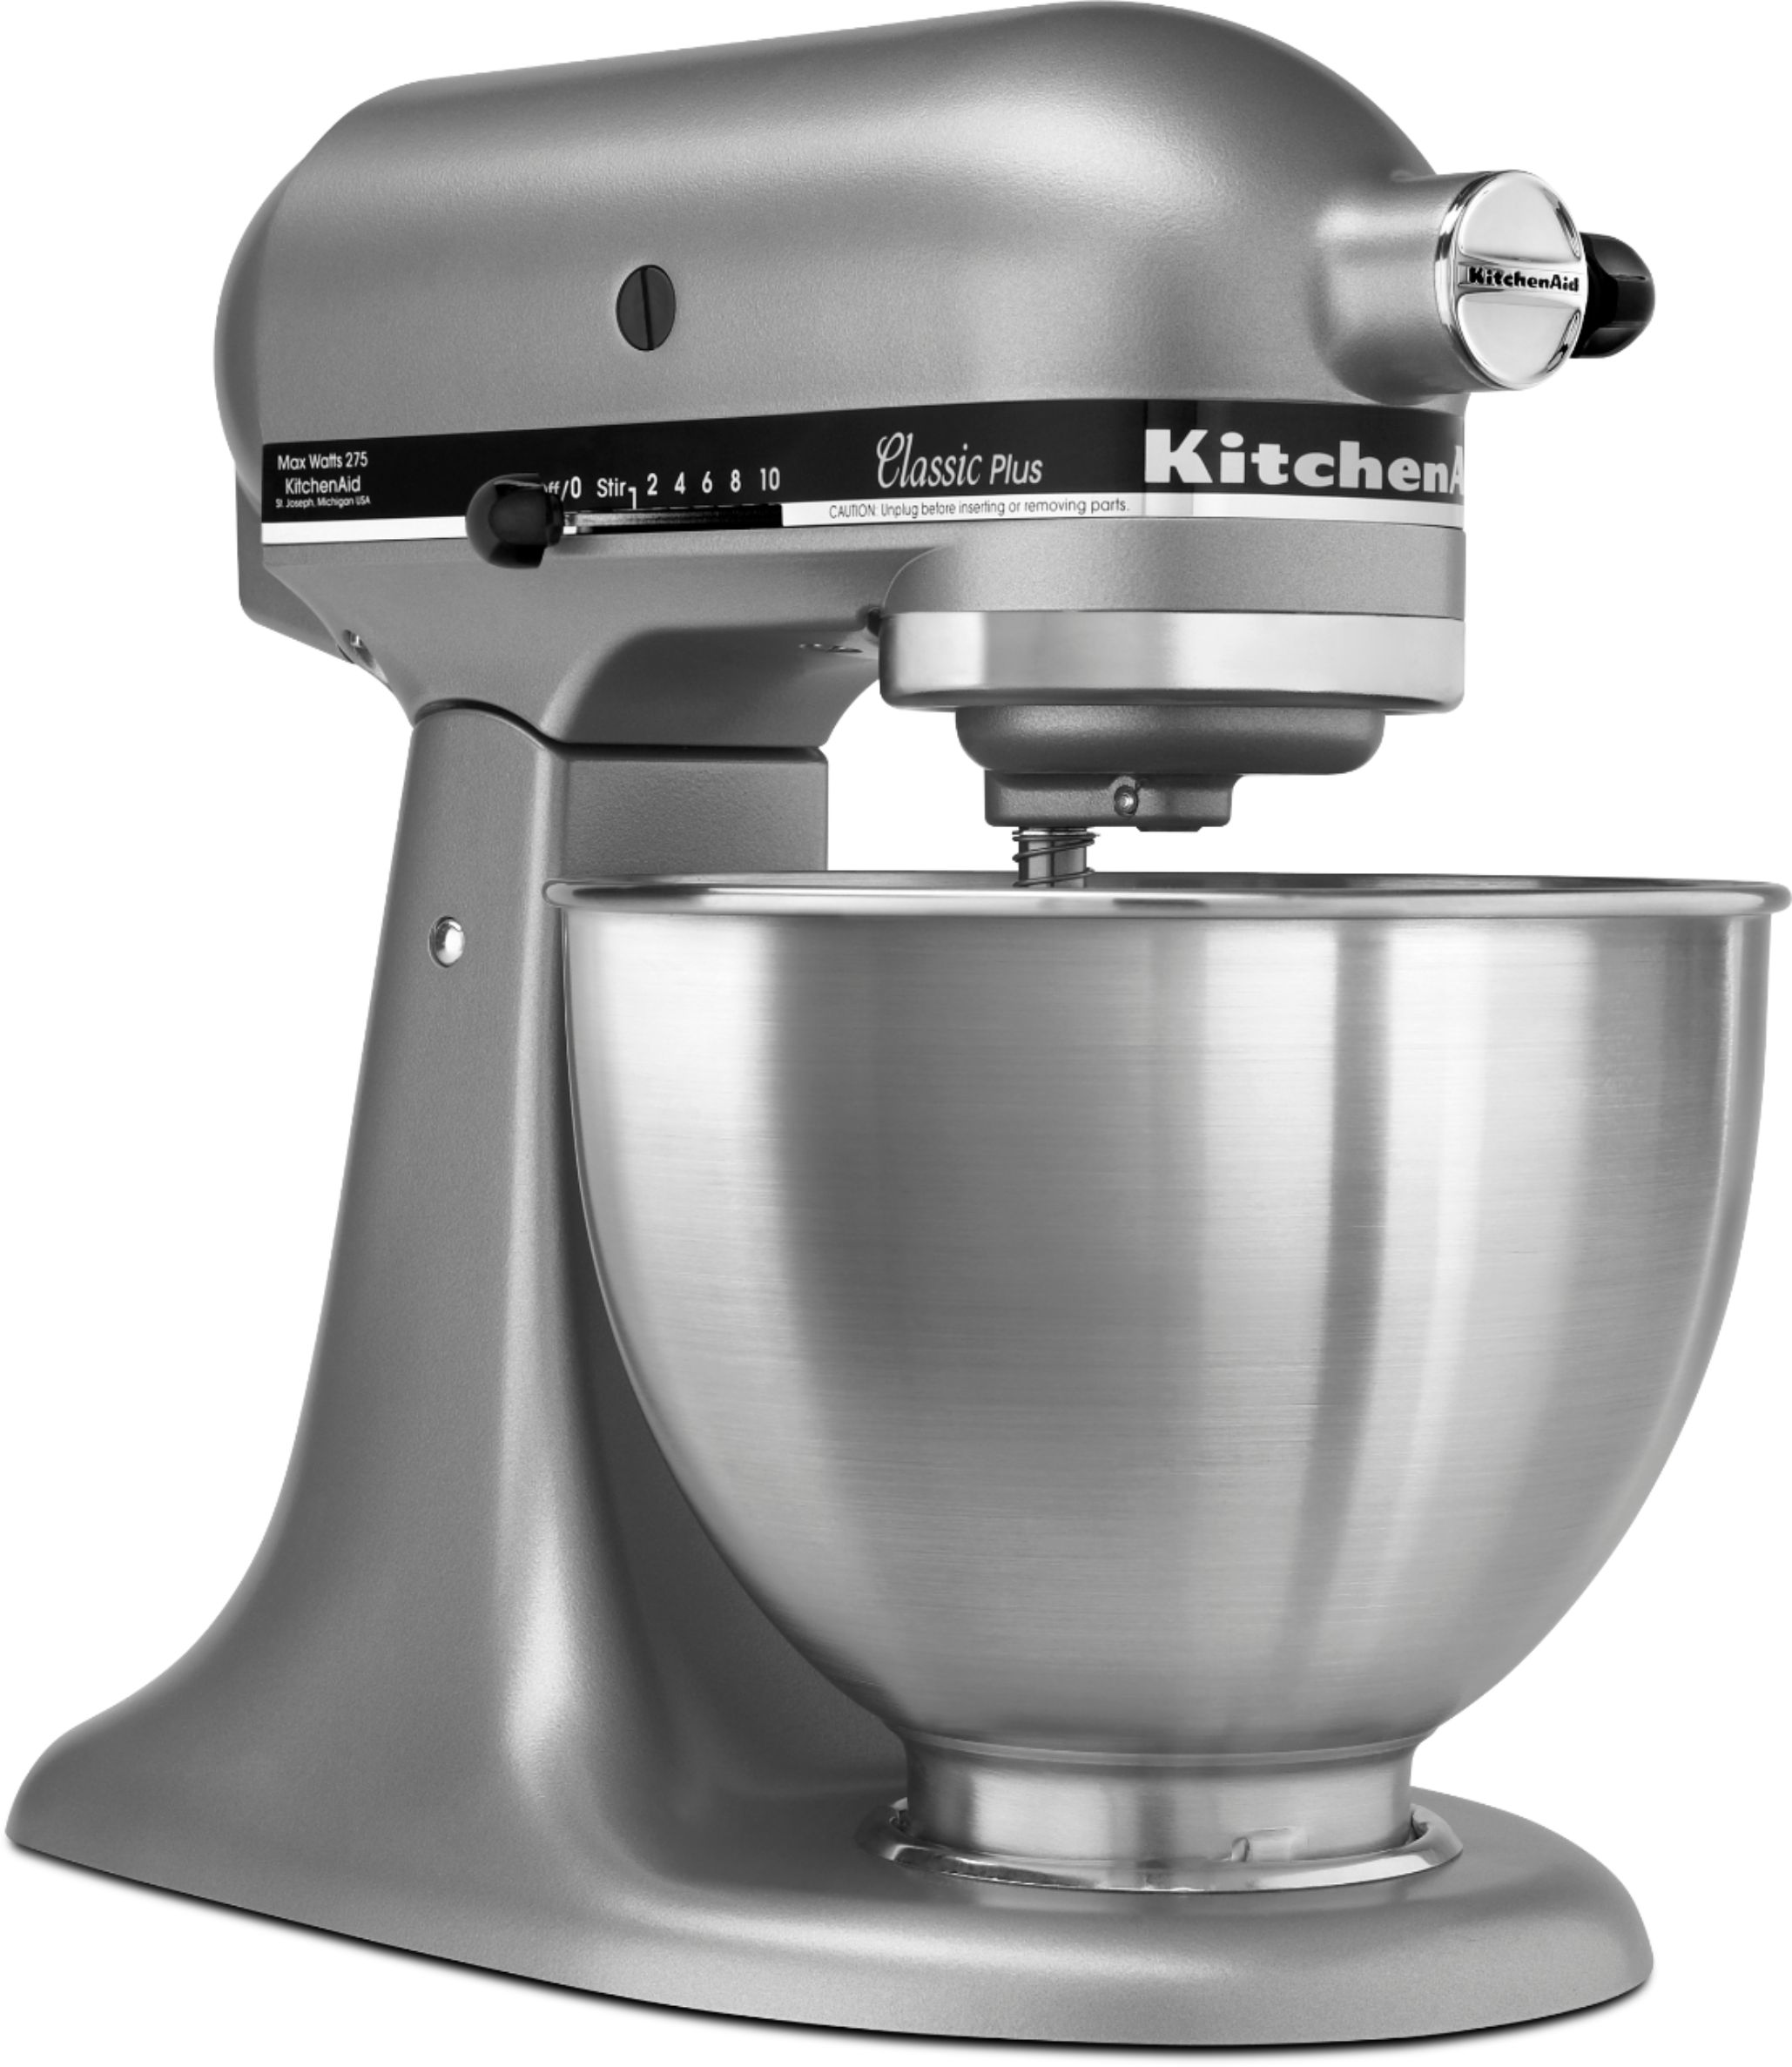 KitchenAid Classic Plus KSM75WH Mixer Review - Consumer Reports